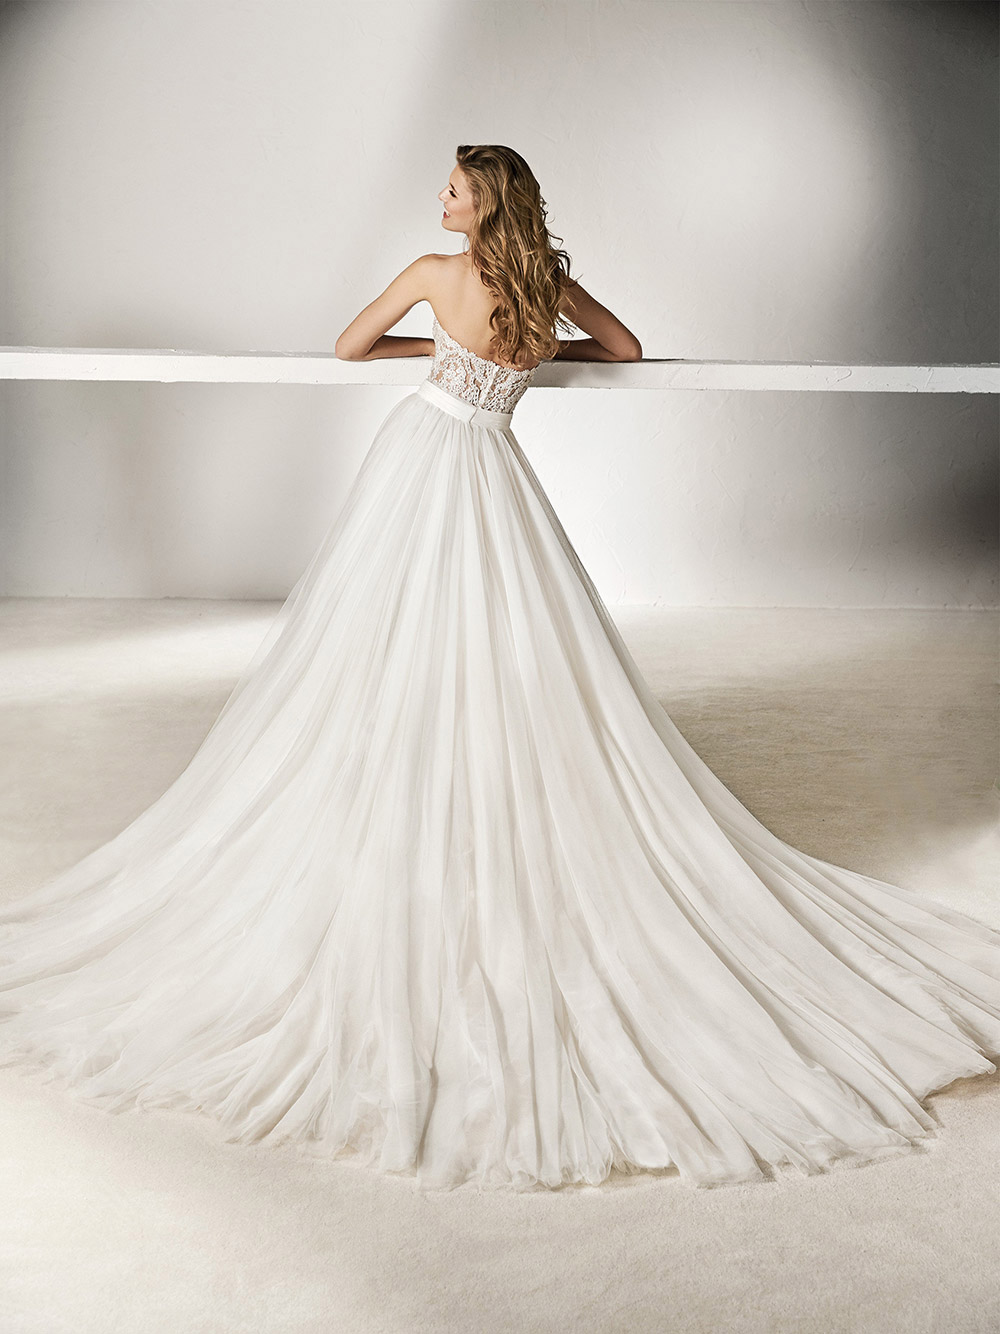 Ximela - Pronovias 2018 Bridal Collection. www.theweddingnotebook.com